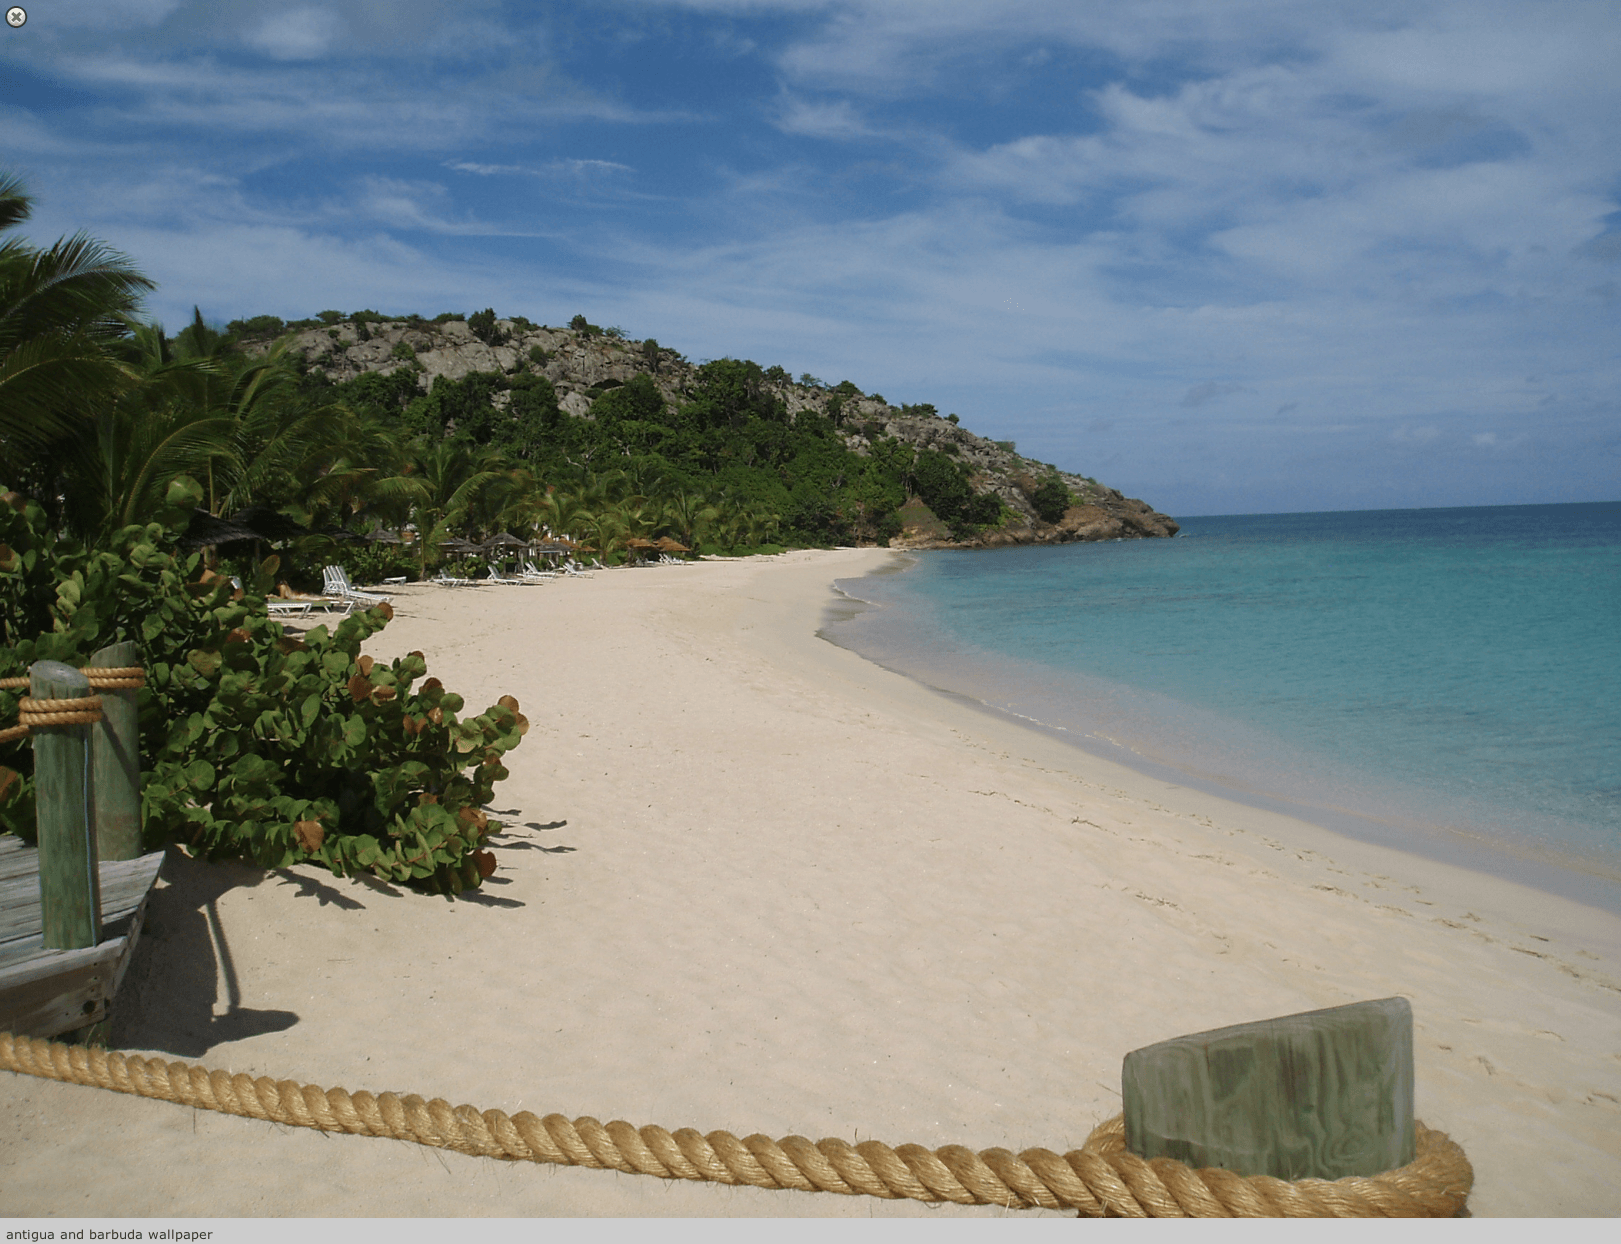 Antigua and Barbuda Tax Rates 25%